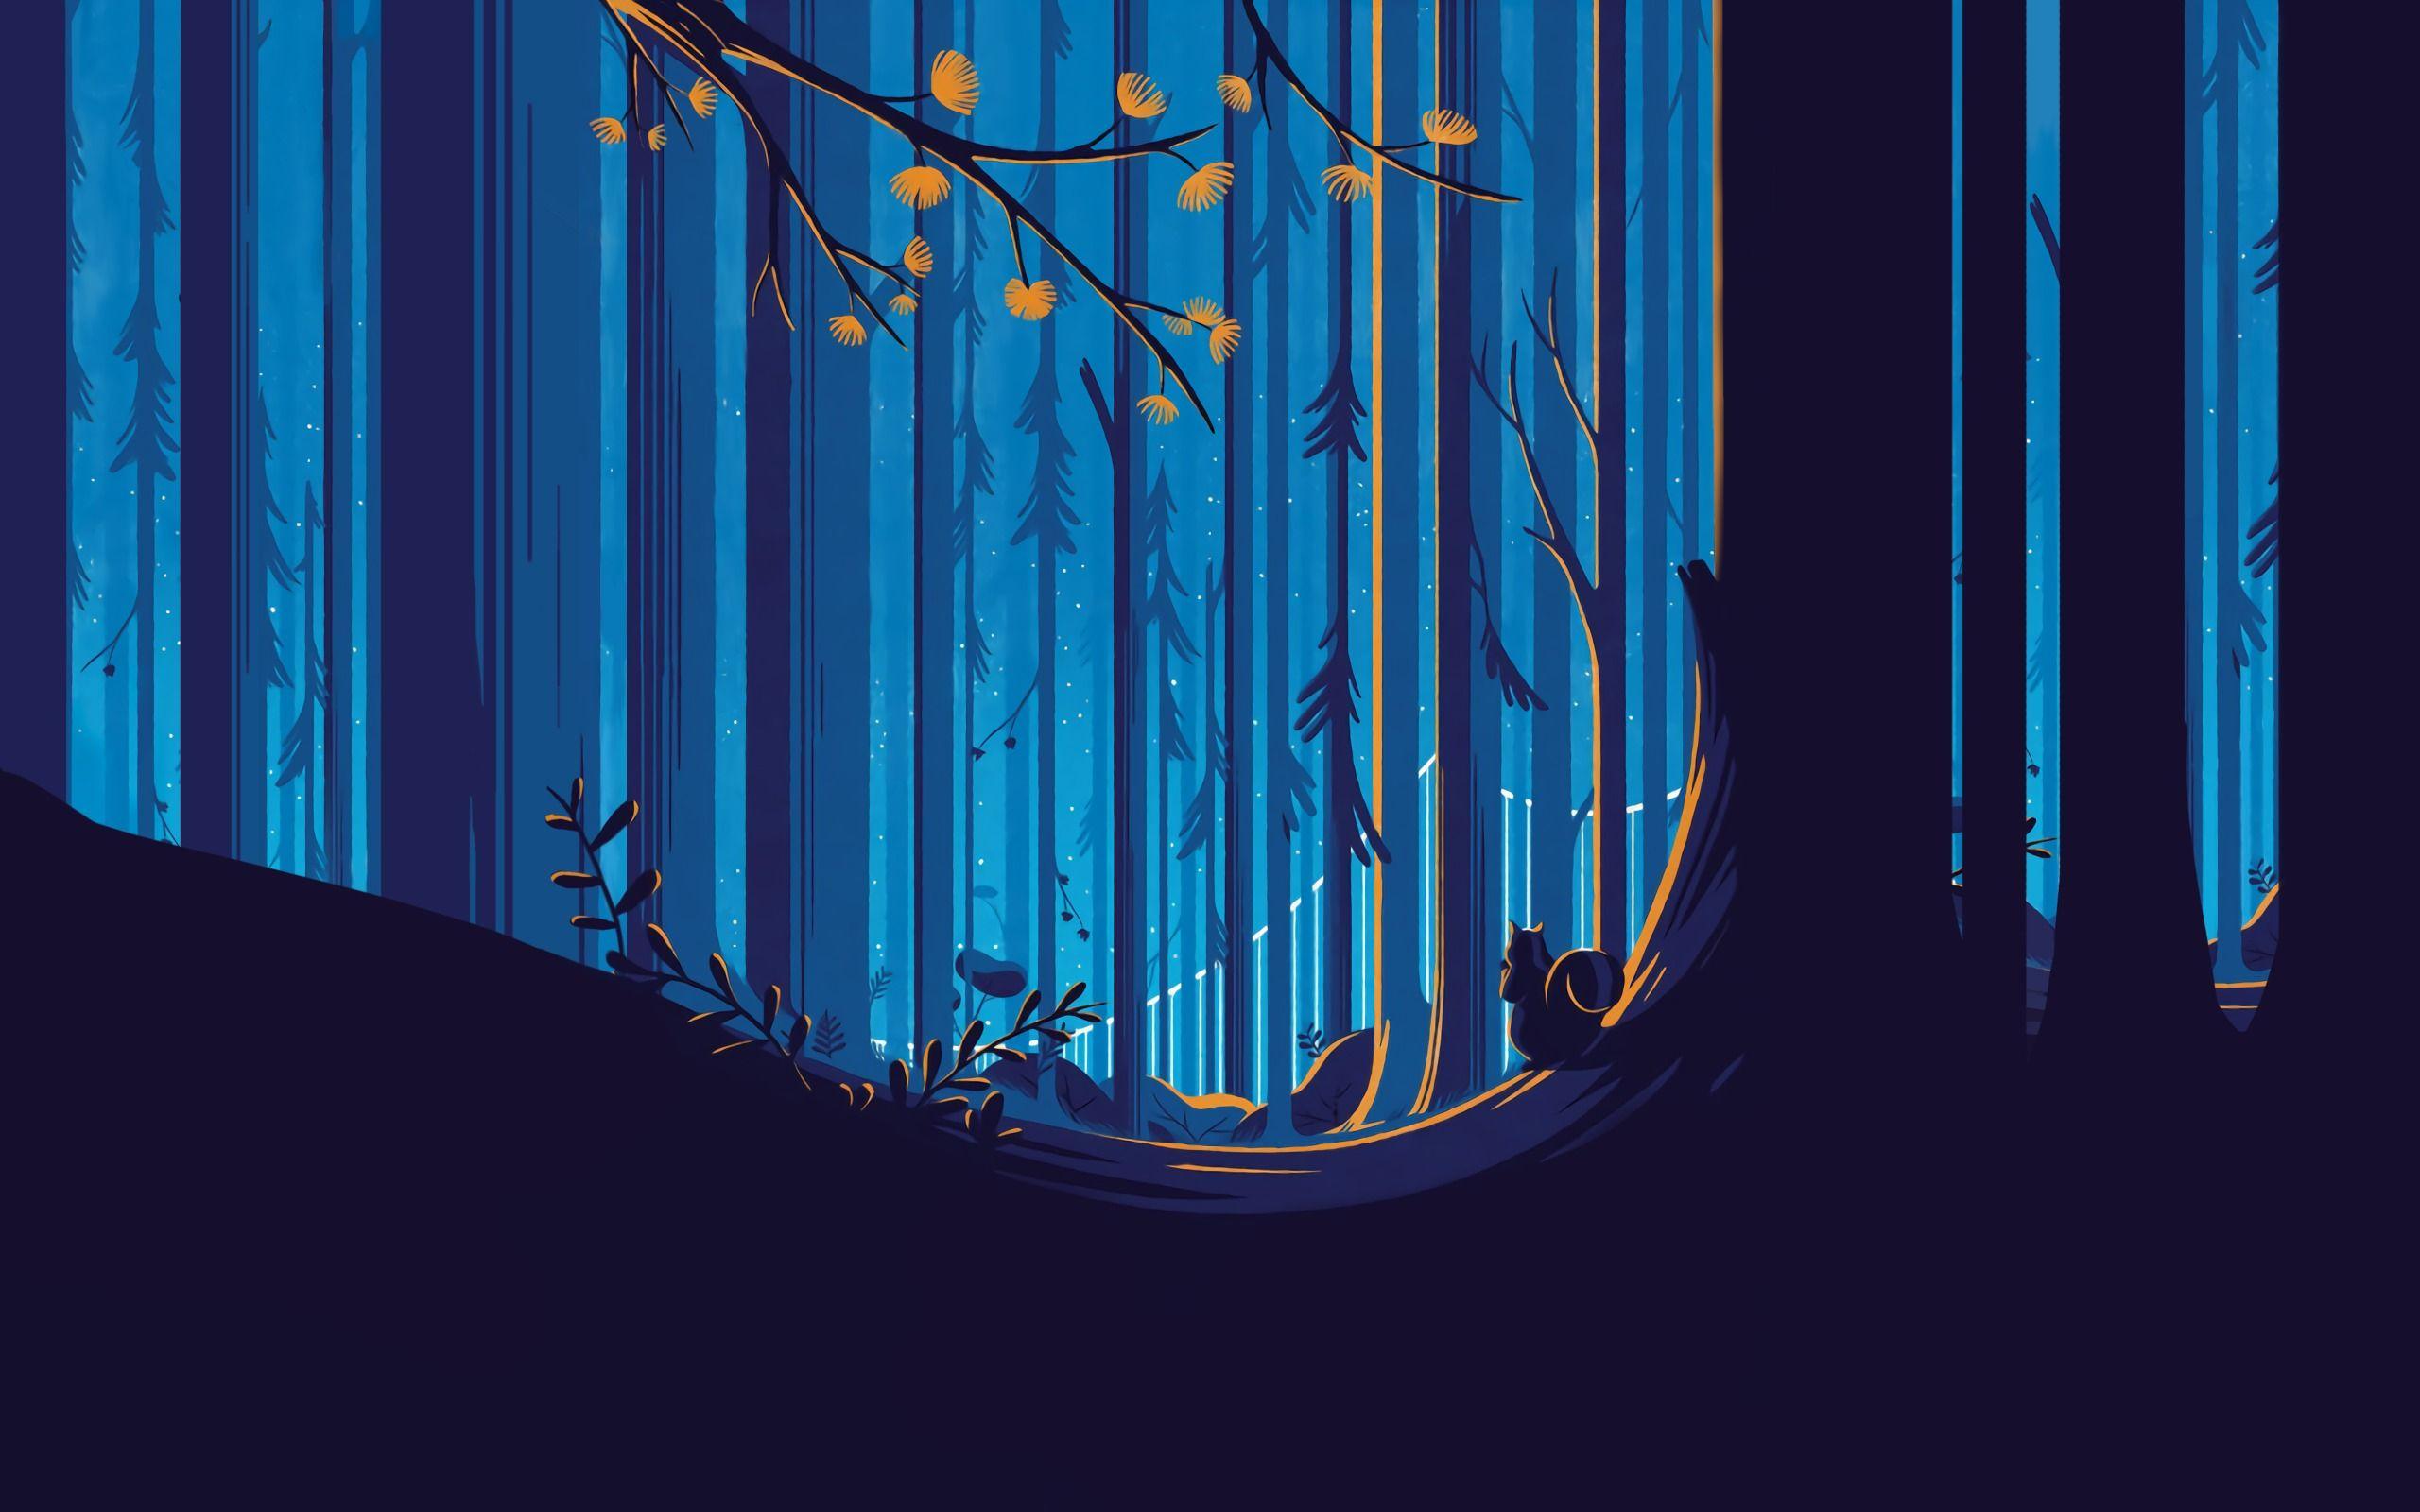 Squirrel In Forest Illustration, Full HD 2K Wallpaper